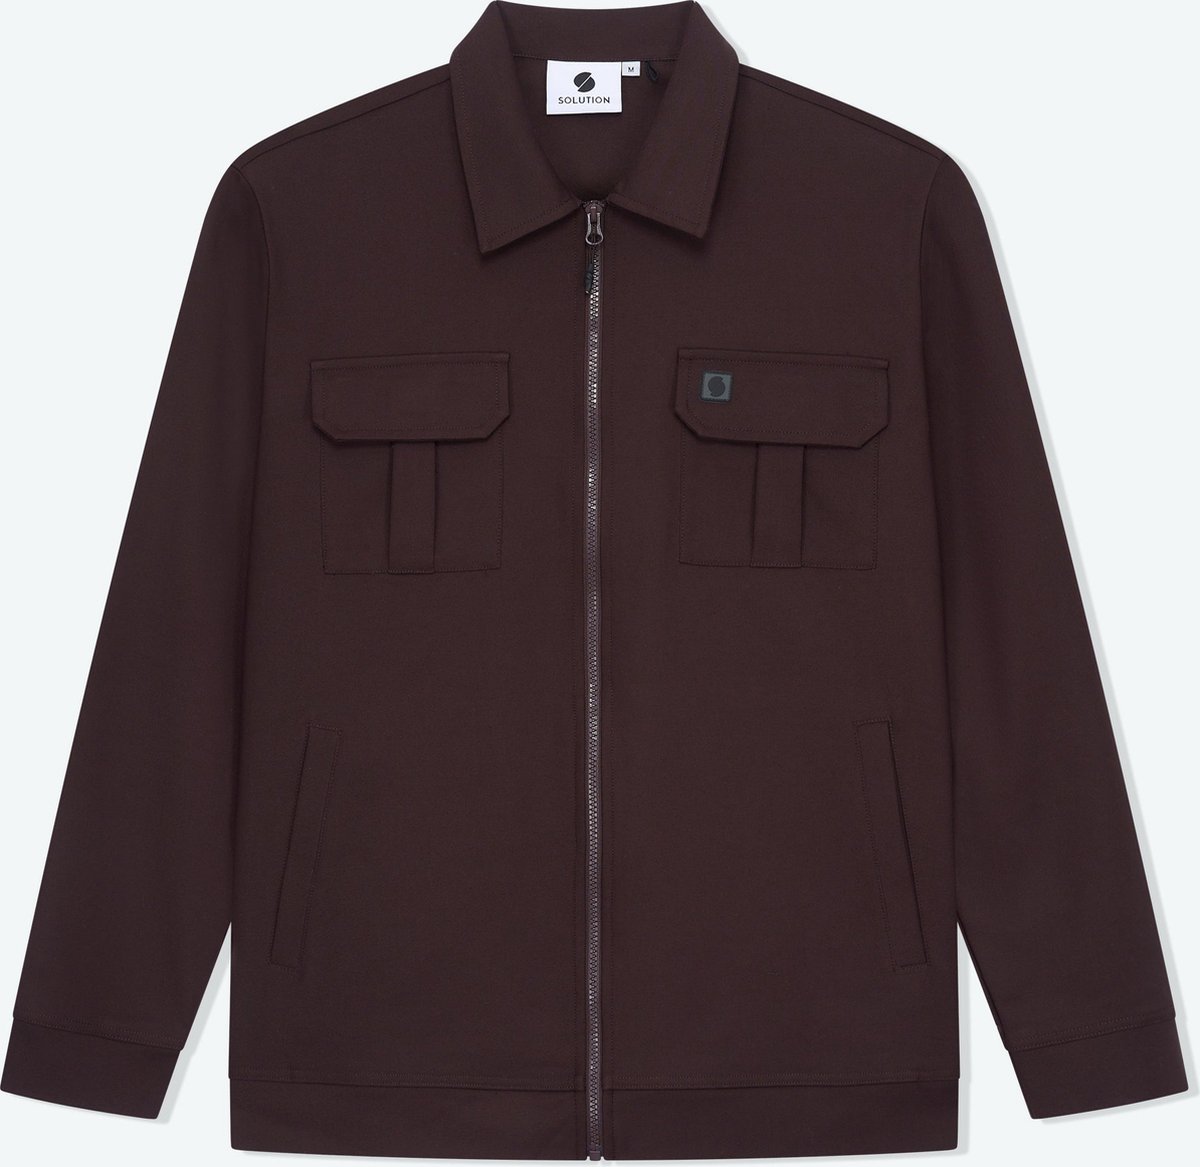 Solution Clothing Sjack - Overshirt - Overhemd - Regular Fit - Rits - Volwassenen - Heren - Mannen - Bruin - M - M - Solution Clothing